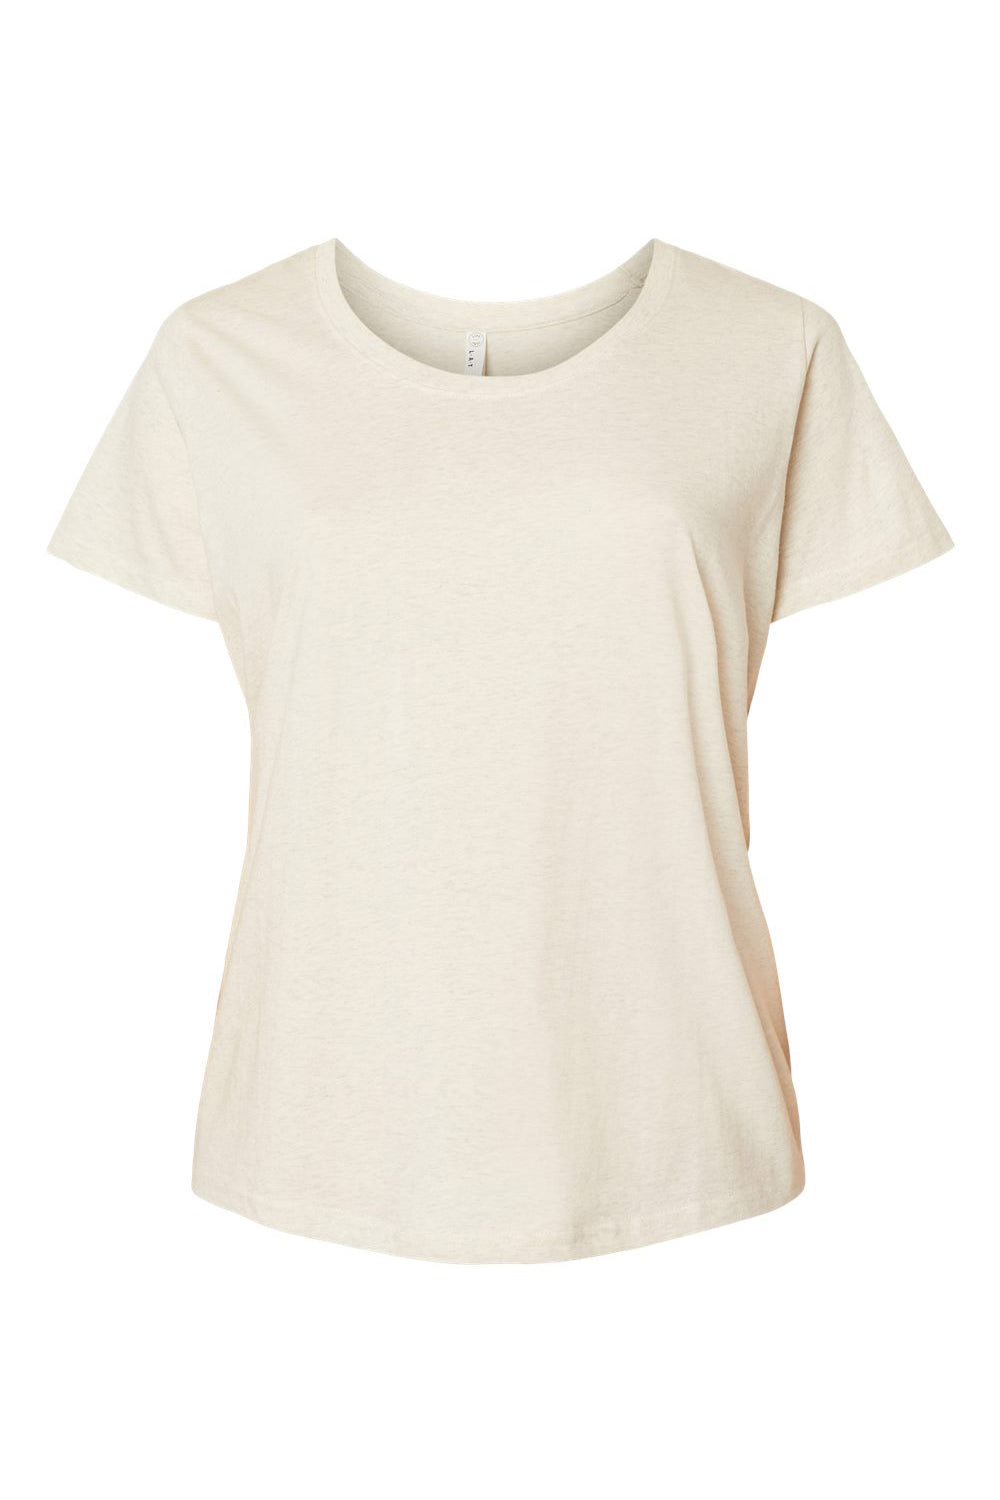 LAT 3816 Womens Curvy Collection Fine Jersey Short Sleeve Crewneck T-Shirt Heather Natural Flat Front